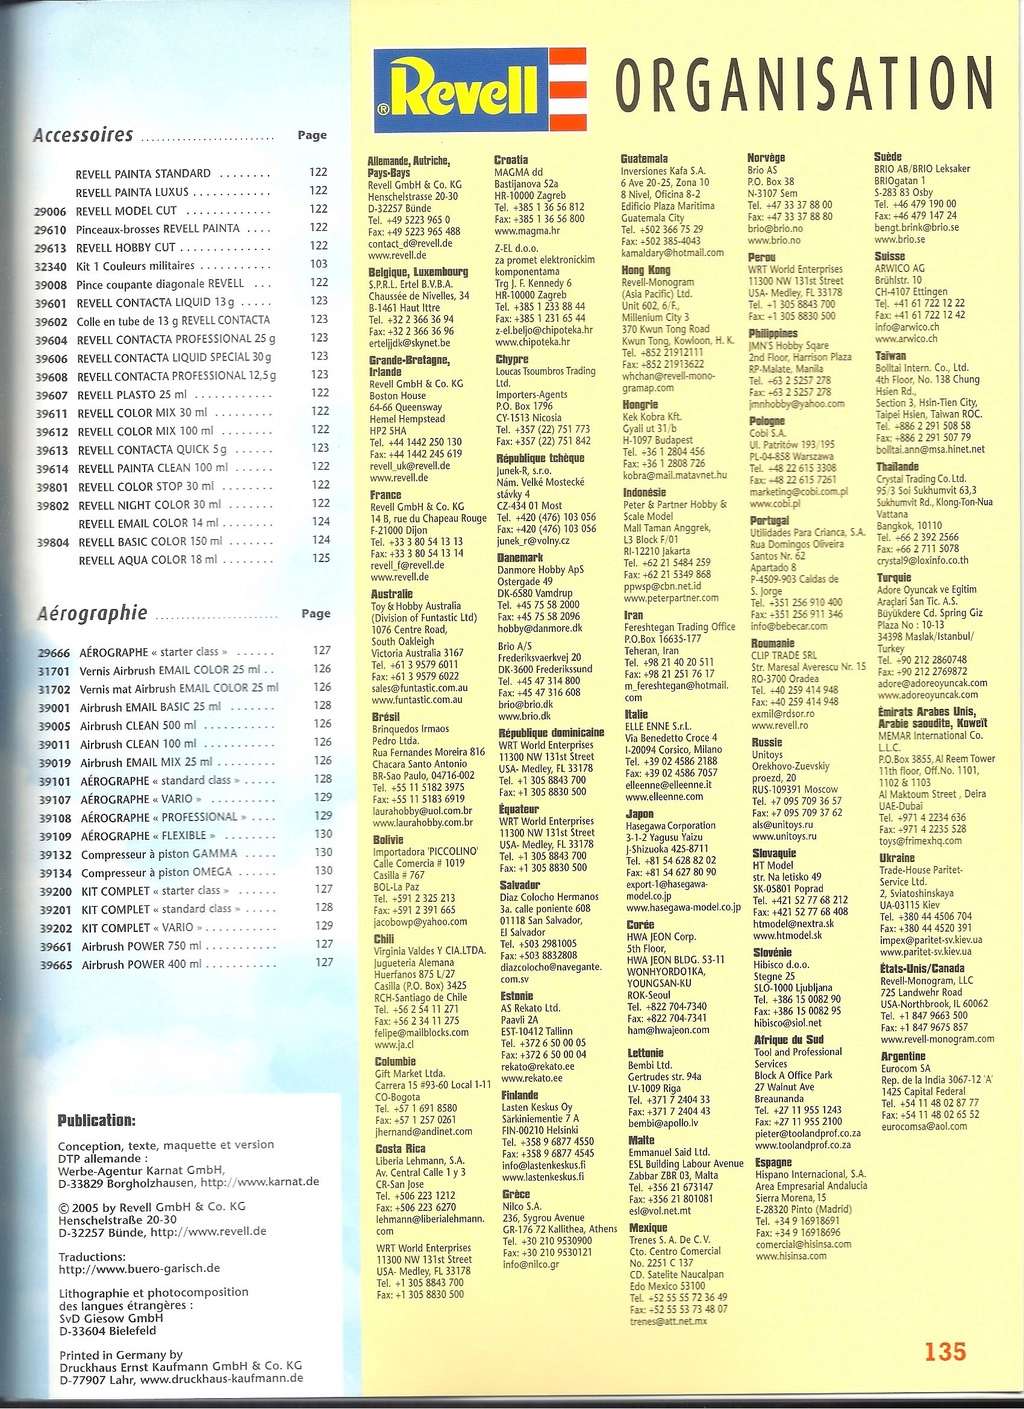 [REVELL 2006] Catalogue 2006, les 50 ans de la marque Revel561